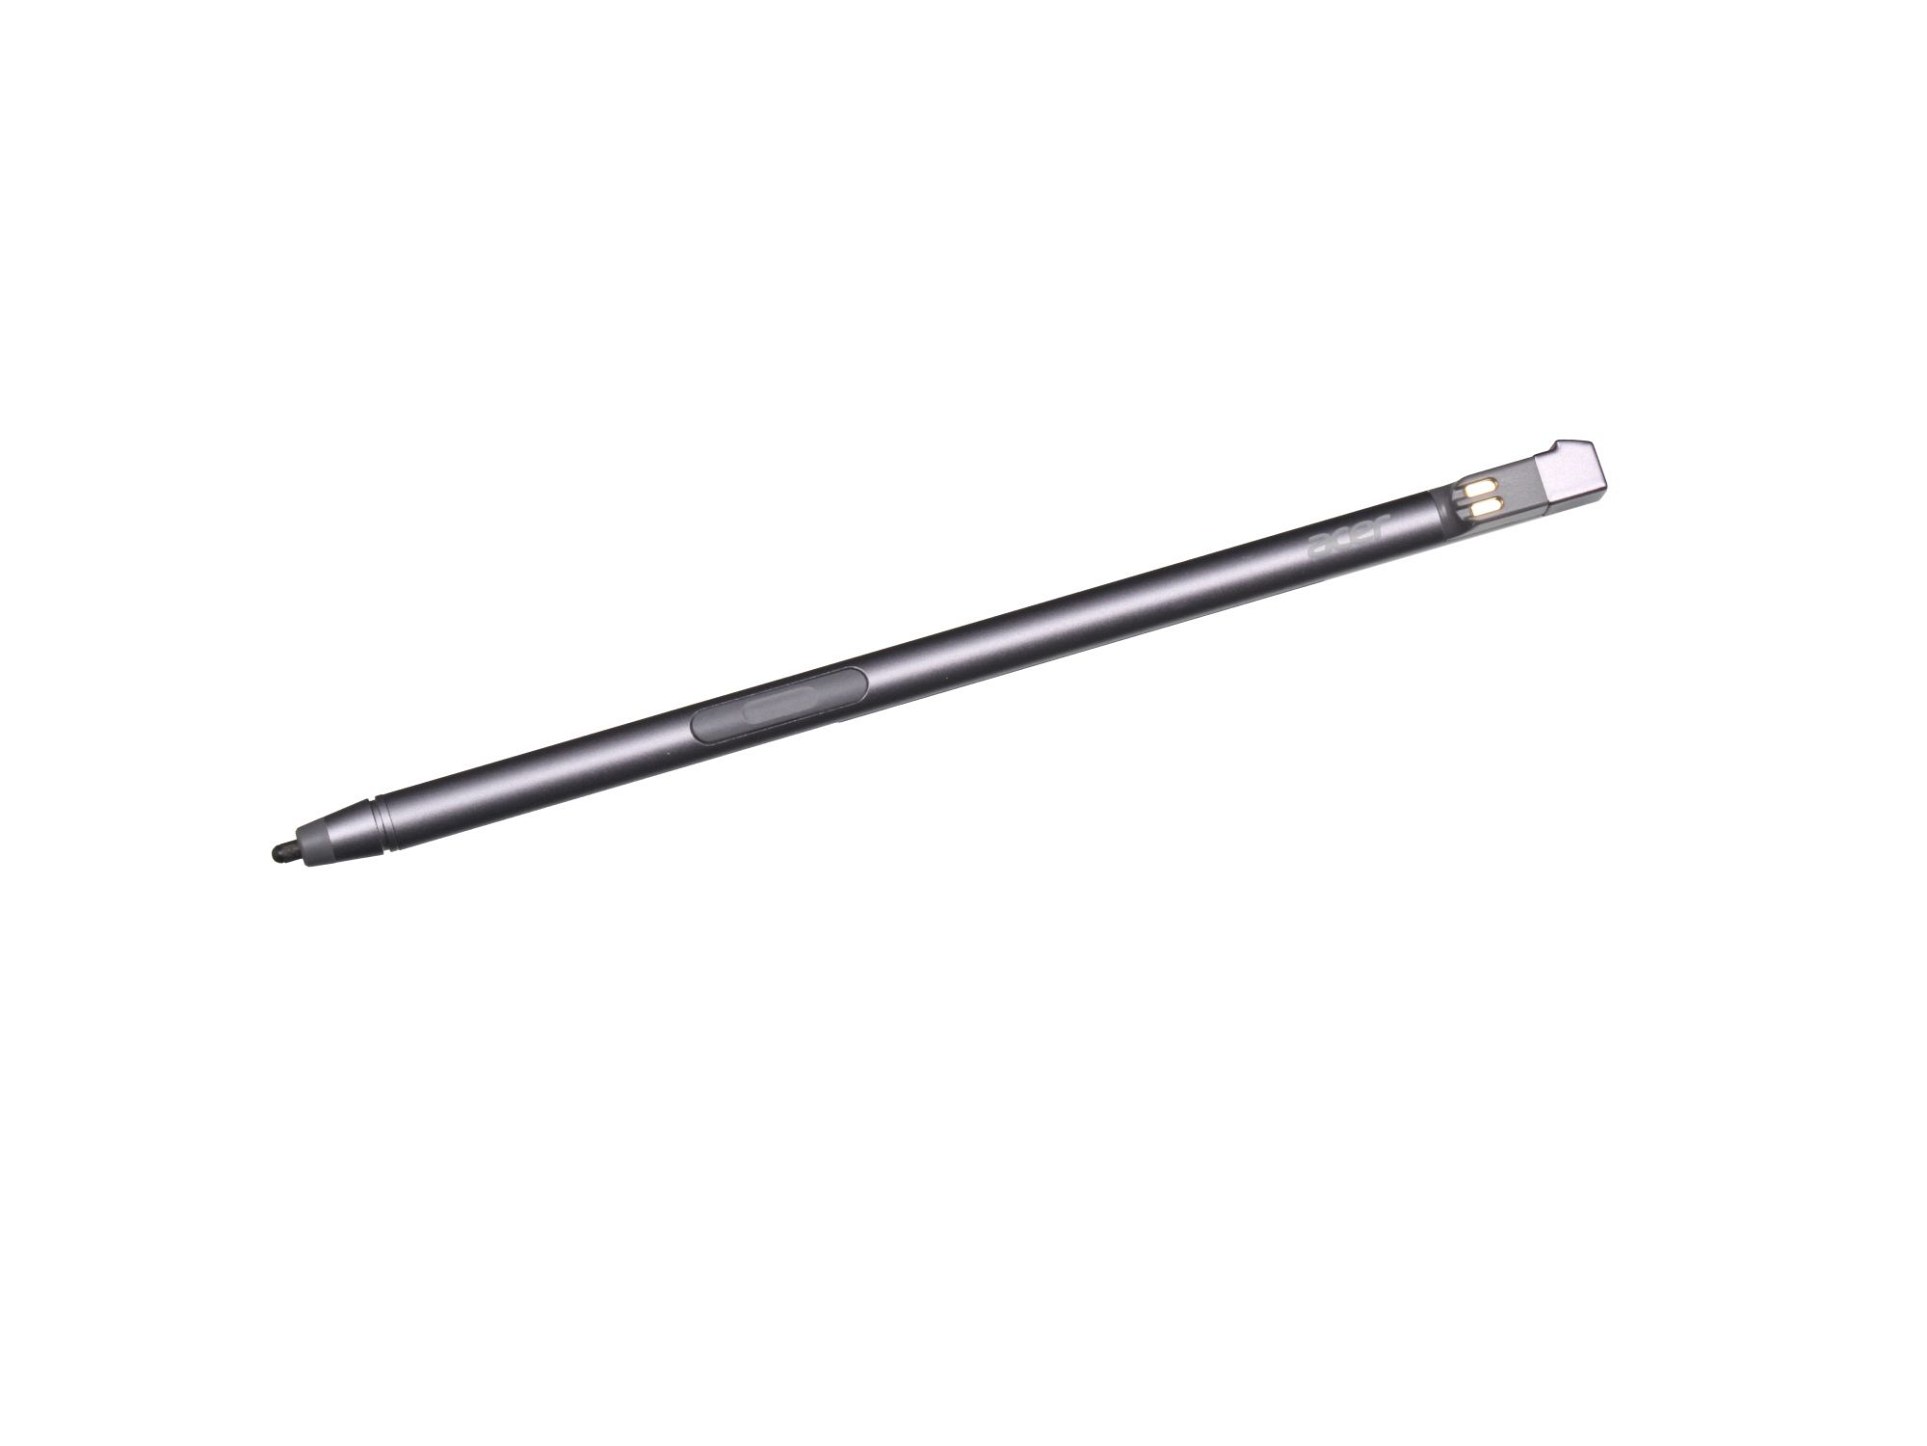 Acer US1073 Stylus Pen